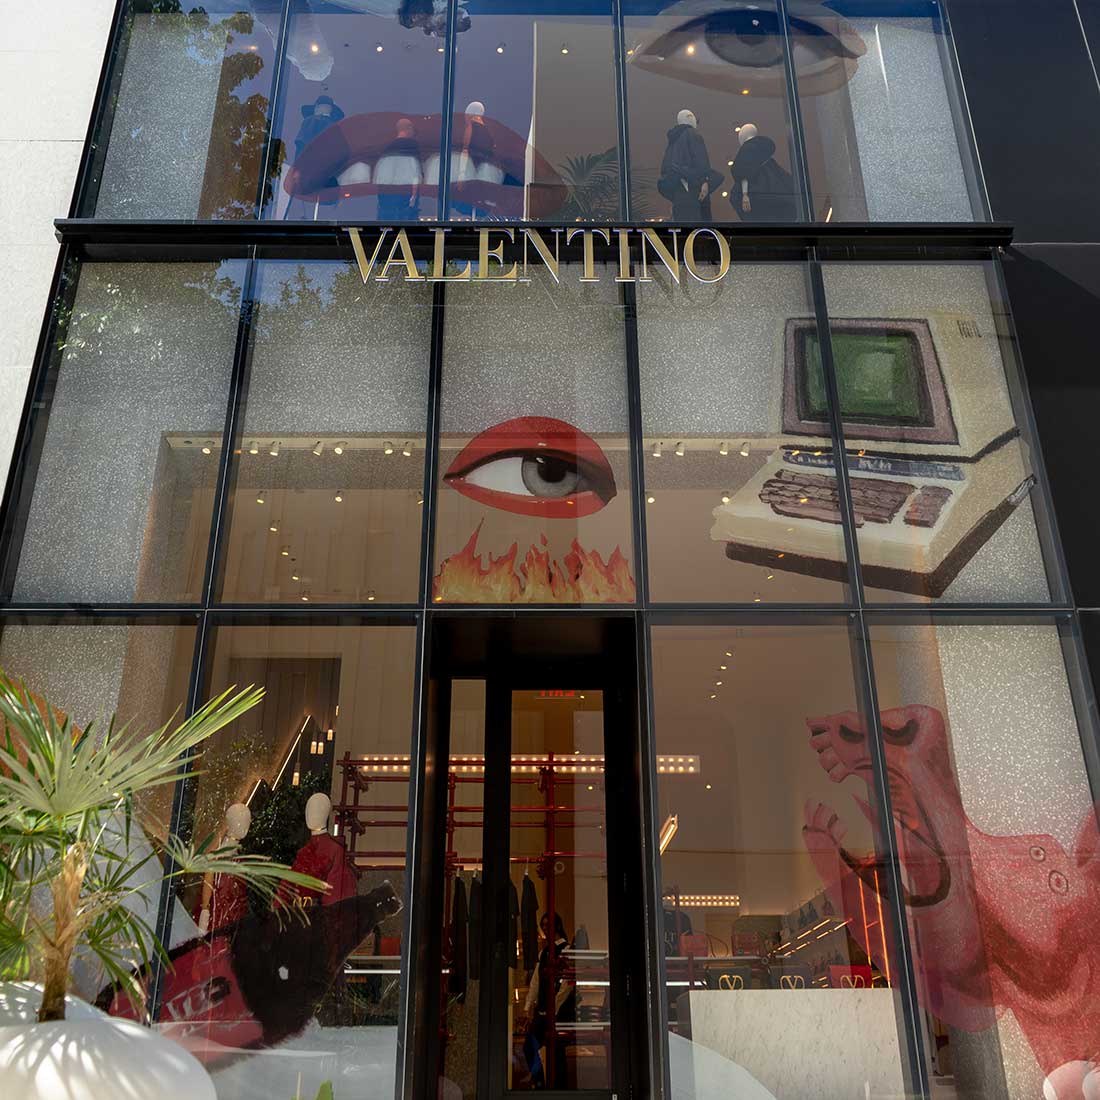 Valentino on X: The world of artist #EmilioVillalba collides with